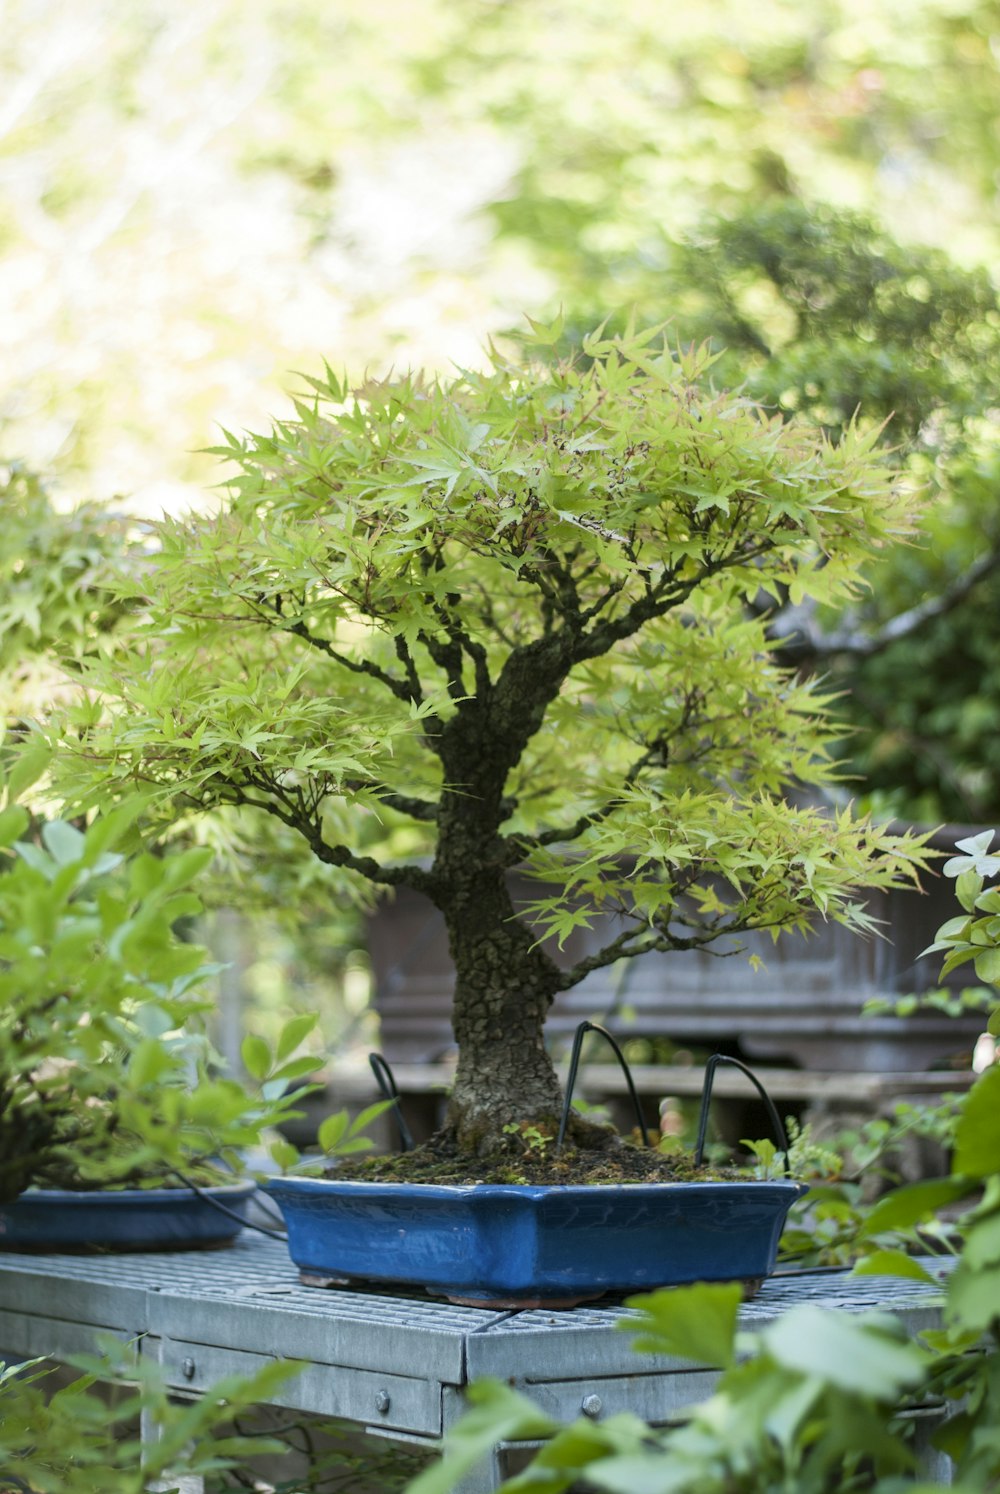 bonsai plant on table in garden